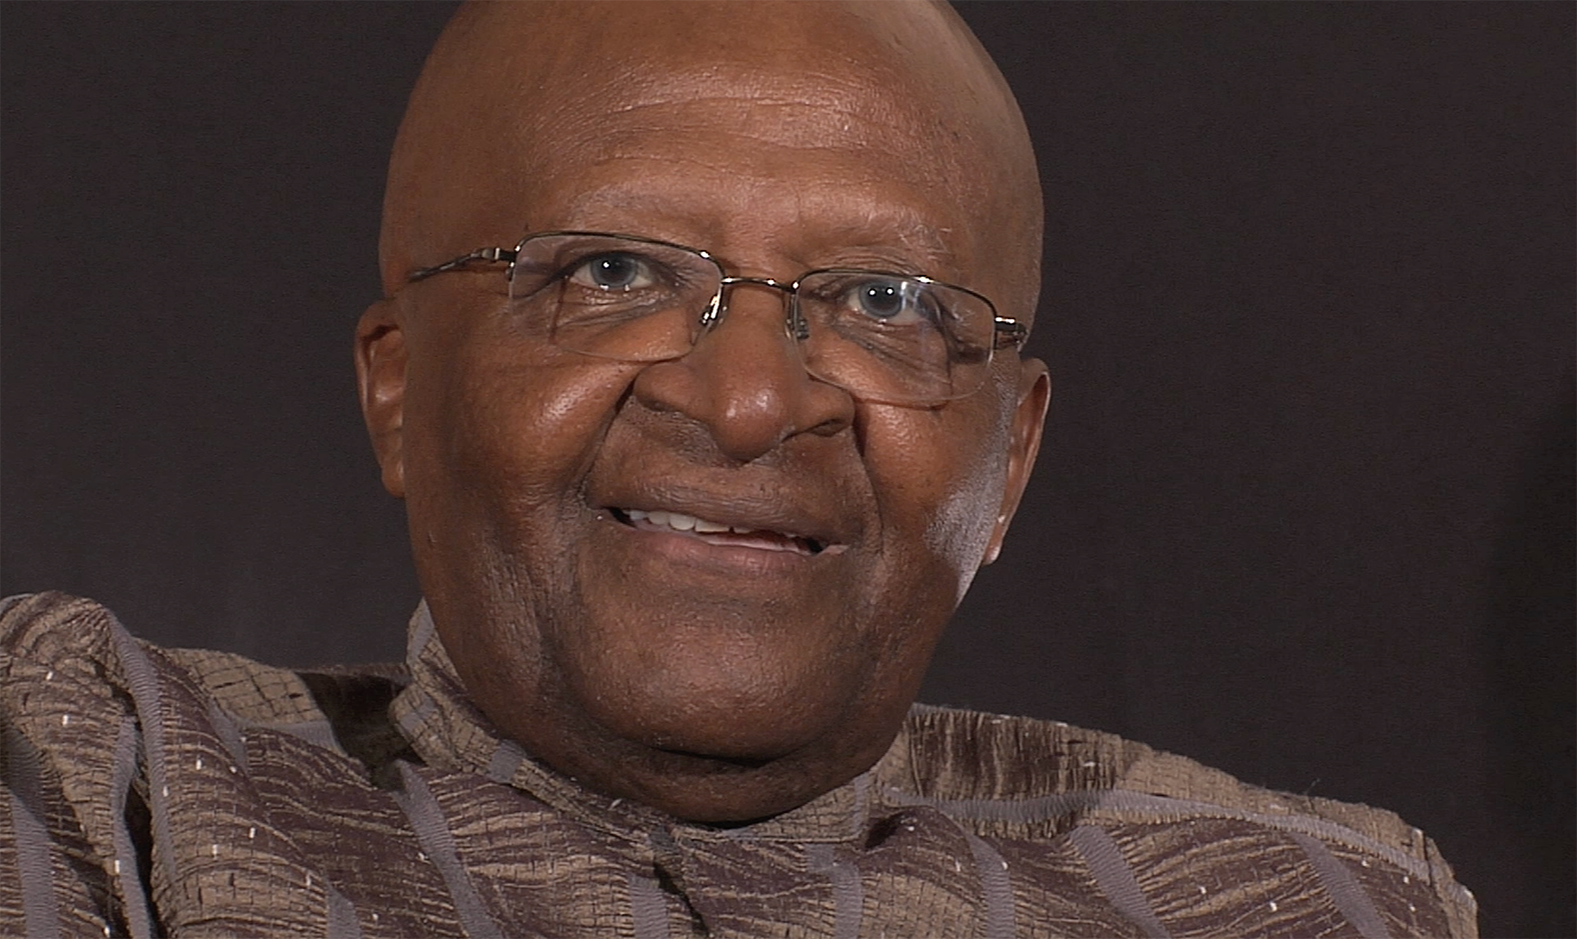 Rev. Desmond Tutu | A Friend and Supporter of the Bosserman Center